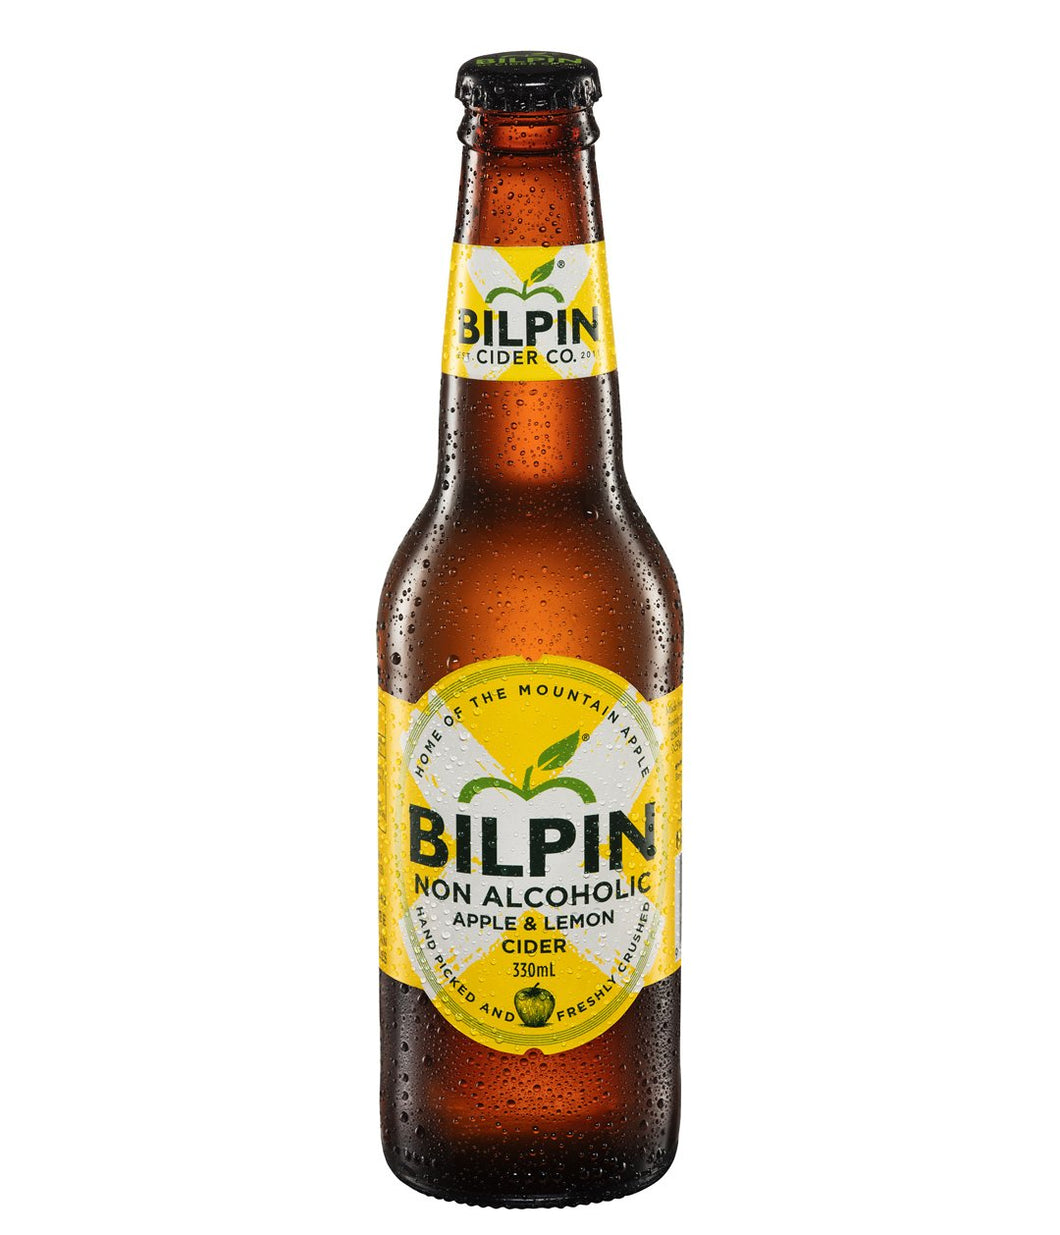 Bilpin Non Alcoholic Apple & Lemon Cider (330ml) (box of 24)